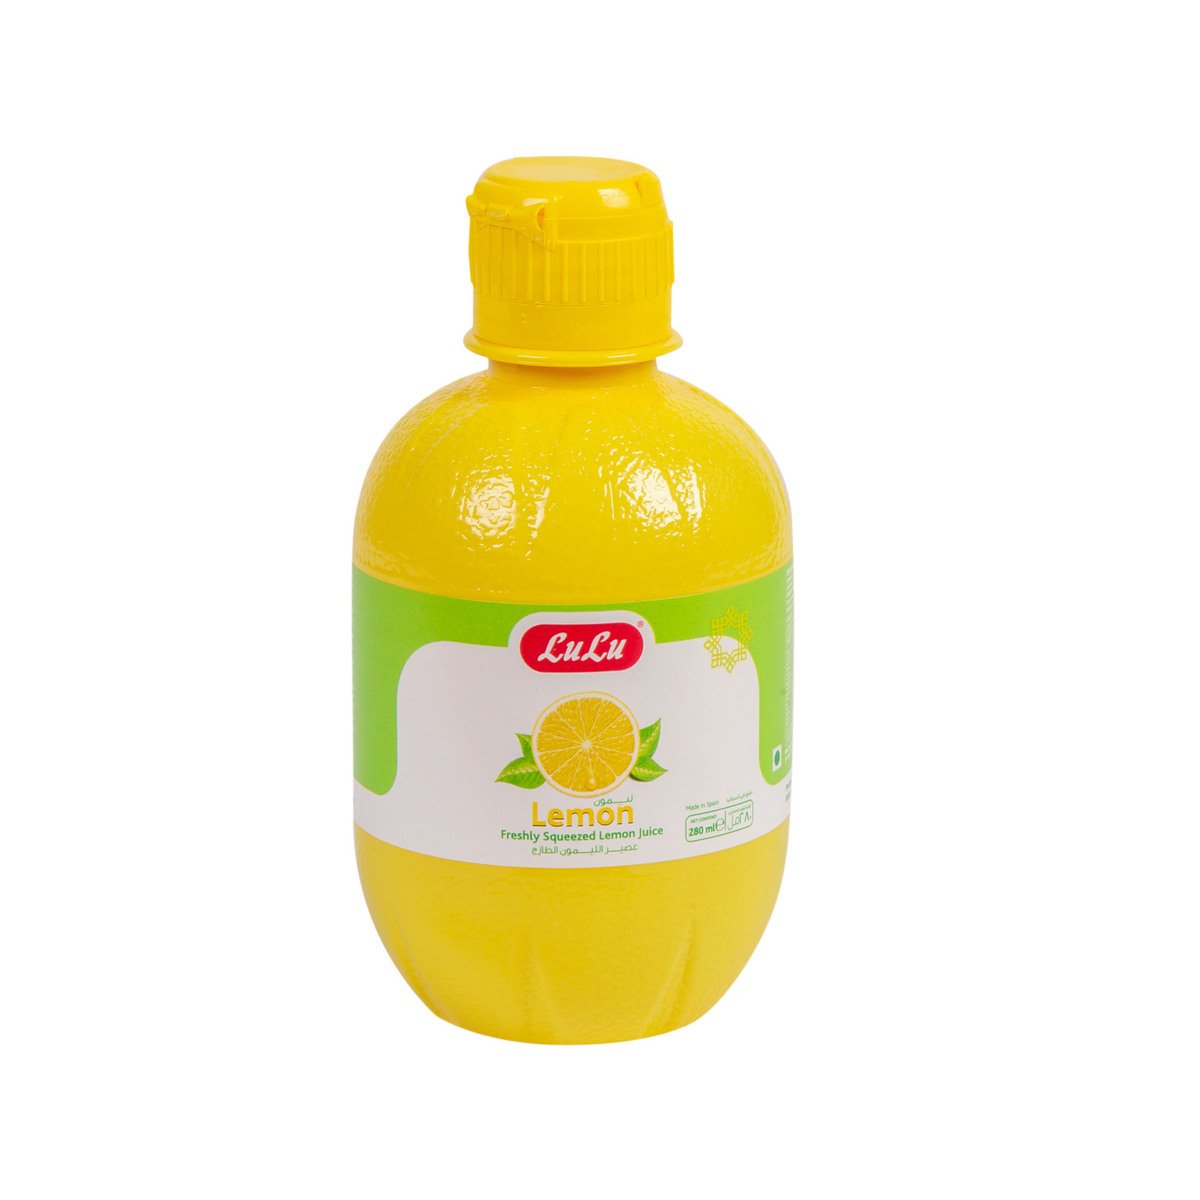 LuLu Freshly Squeezed Lemon juice 280 ml